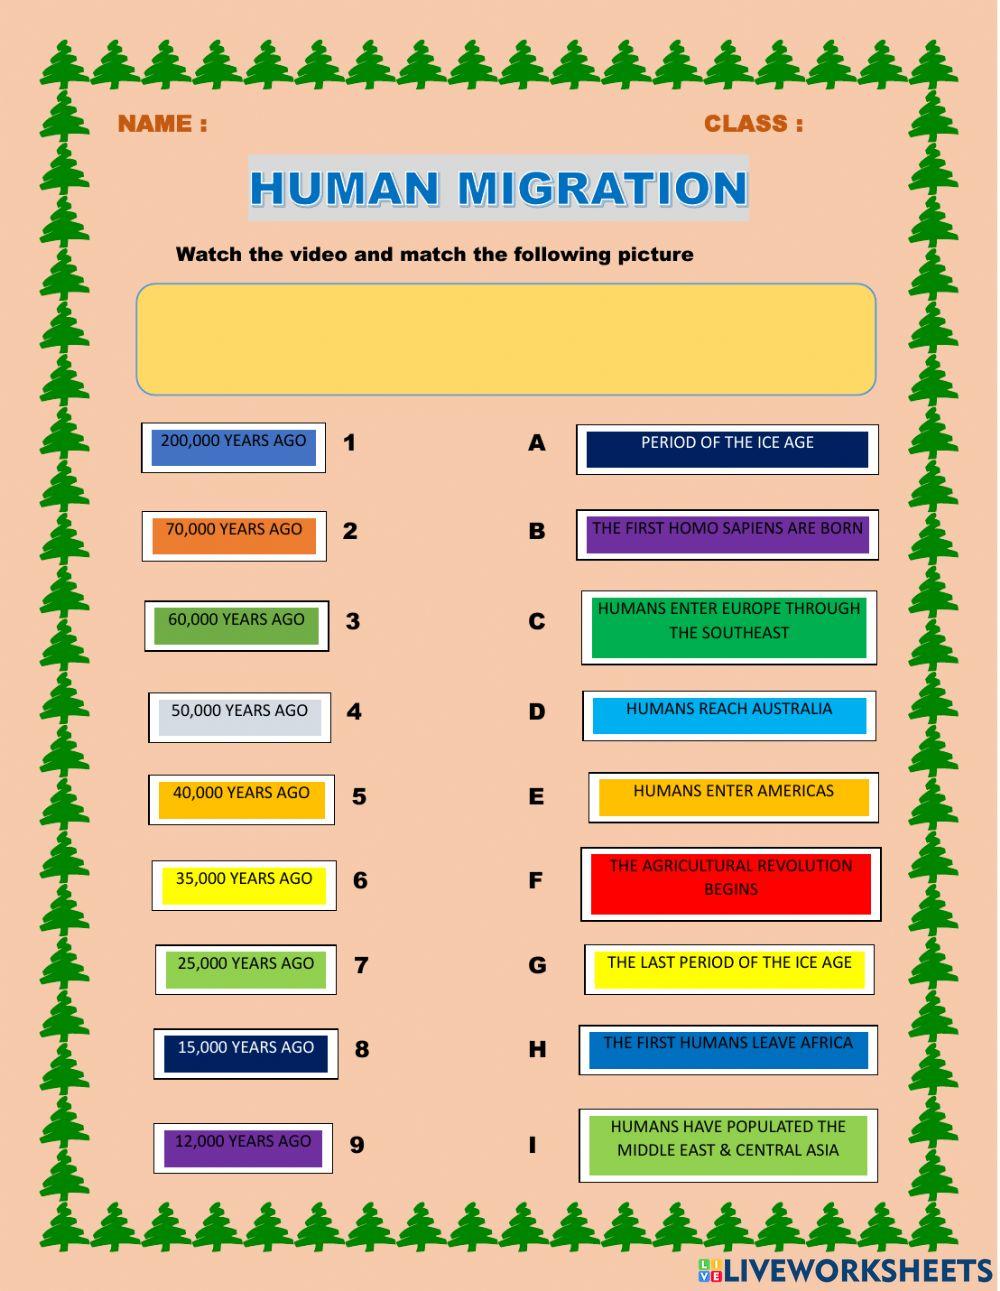 Human migration